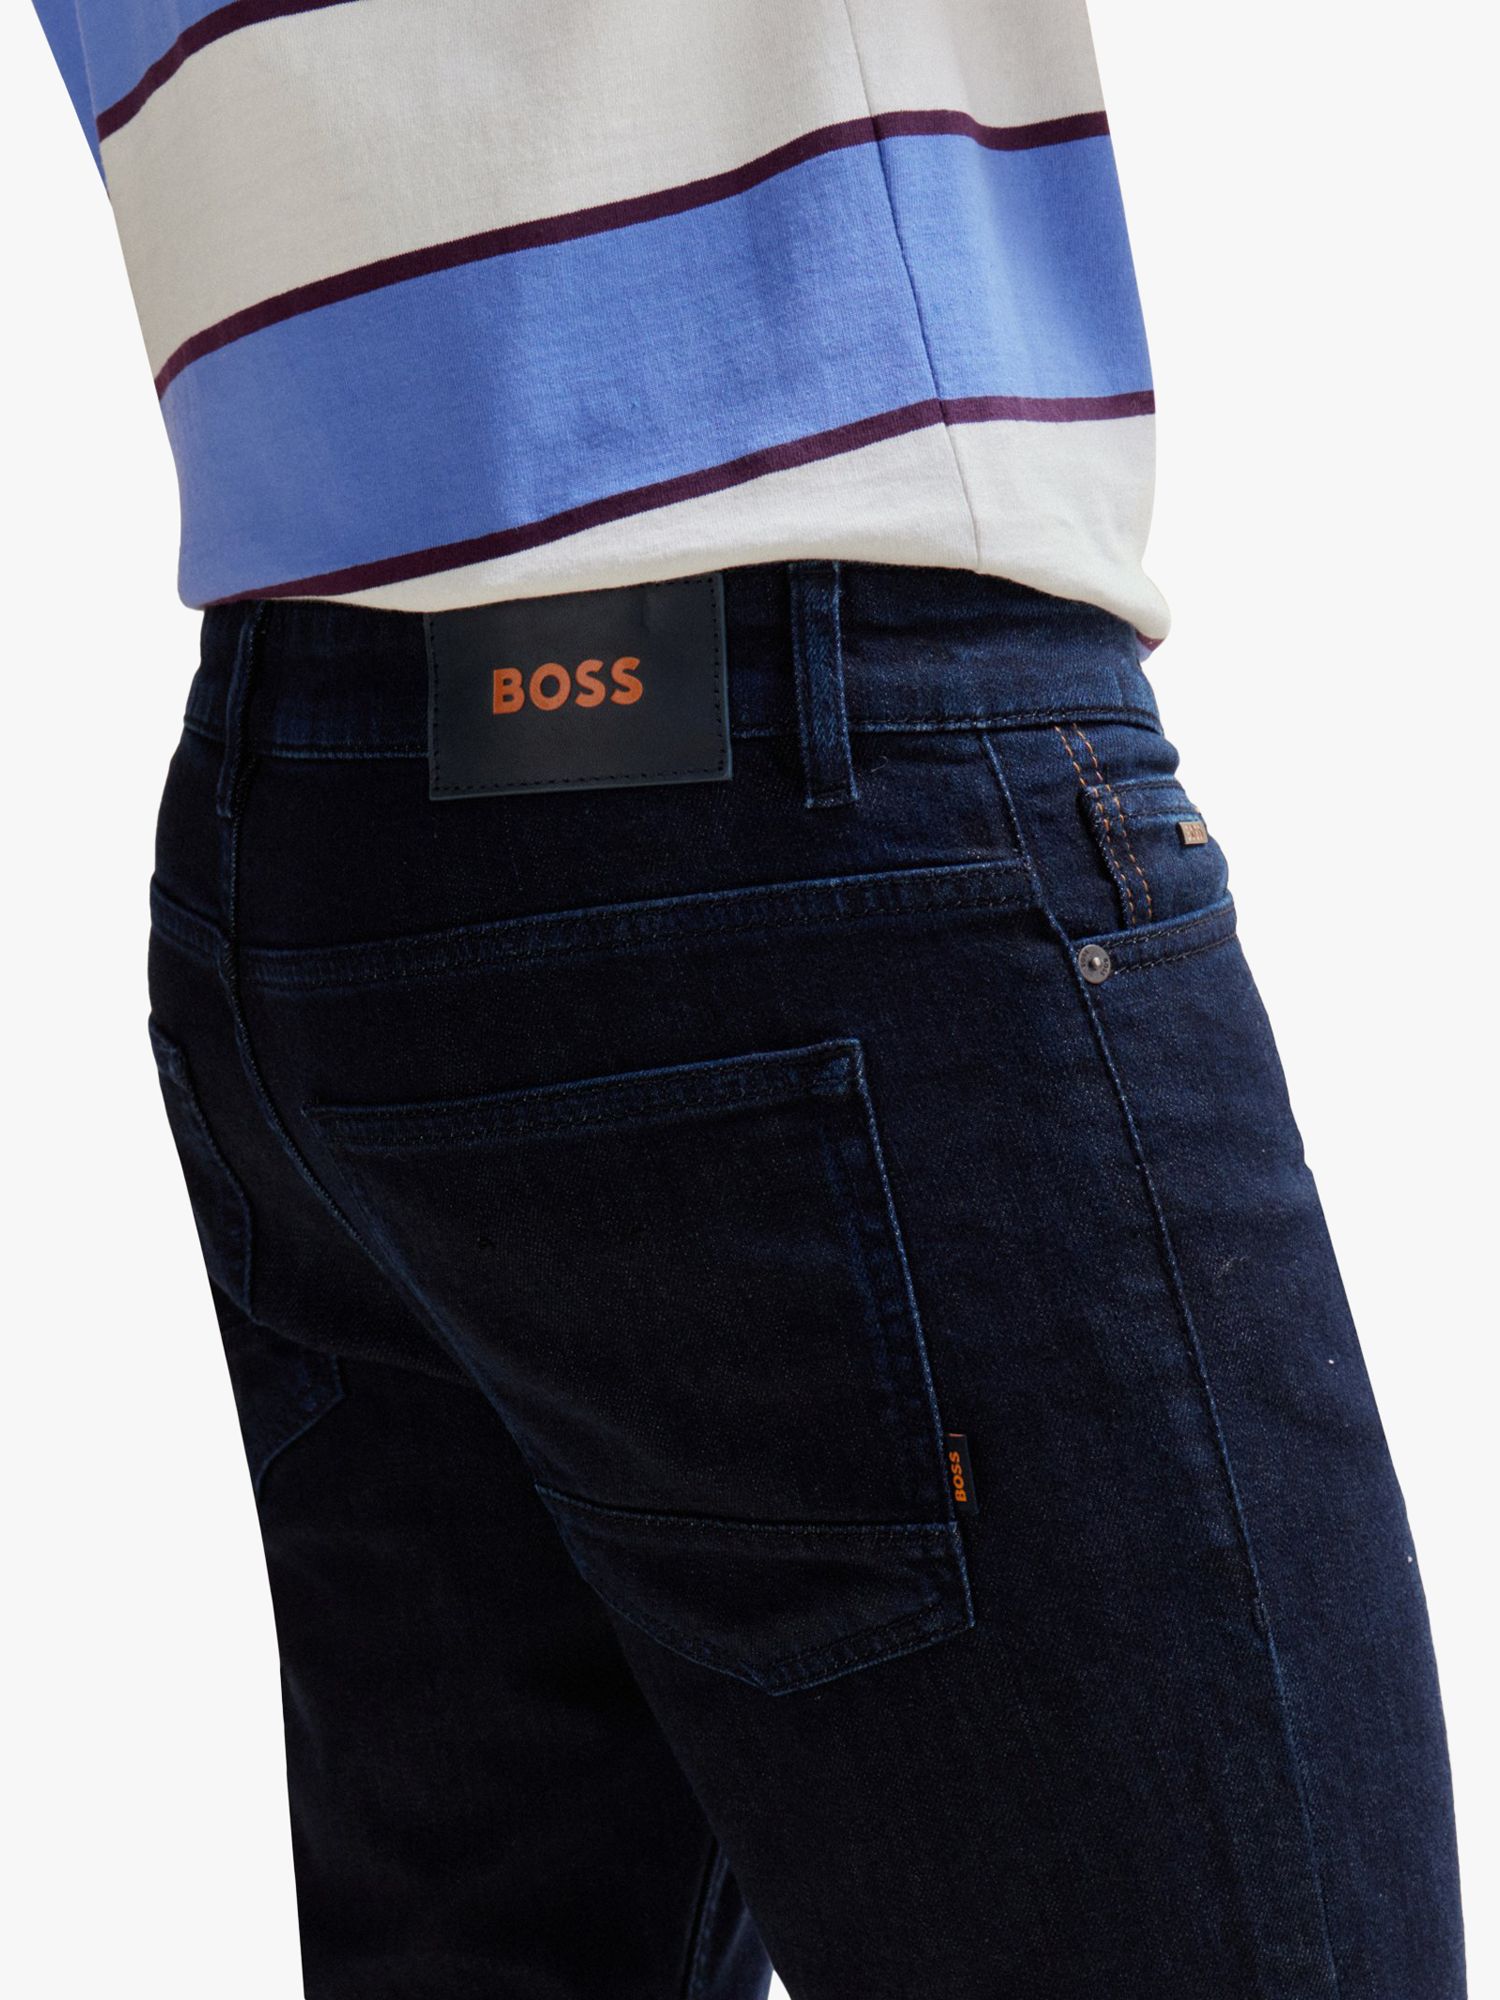 Buy Boss Delaware Slim Fit Jeans, Navy Online at johnlewis.com